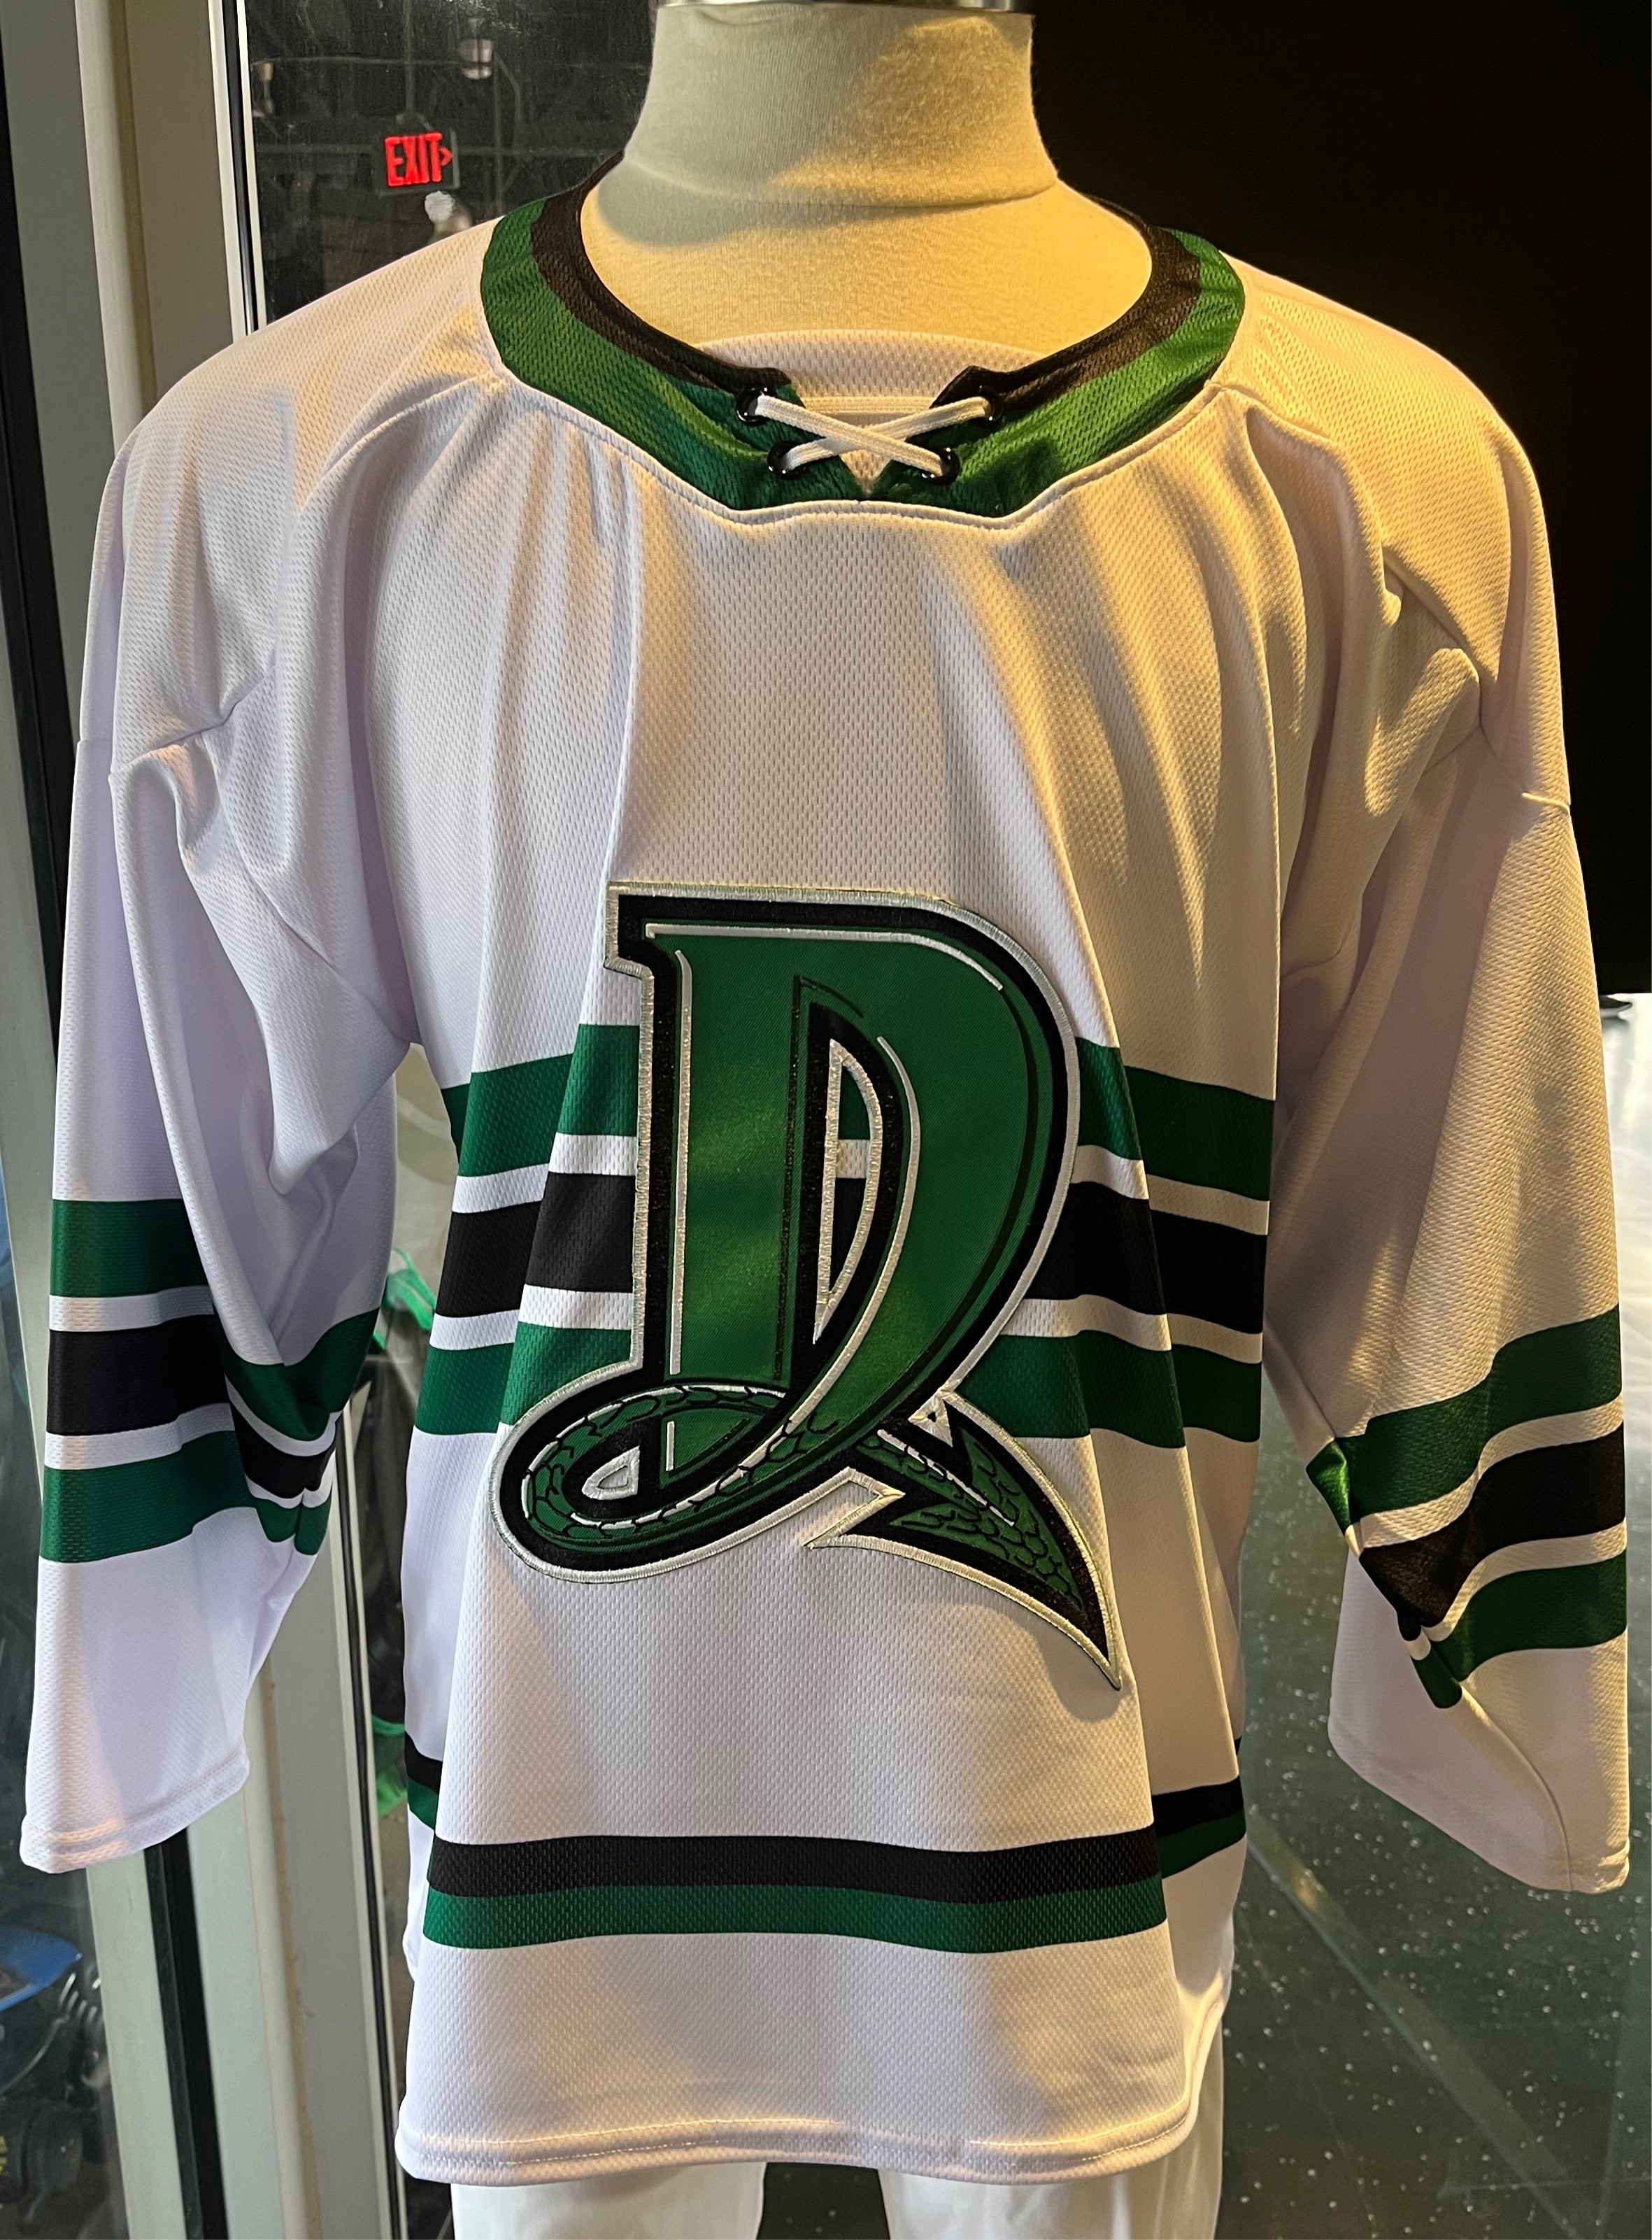 OT Sports Authentic Hockey Replica Jersey Small / White/Black/Green